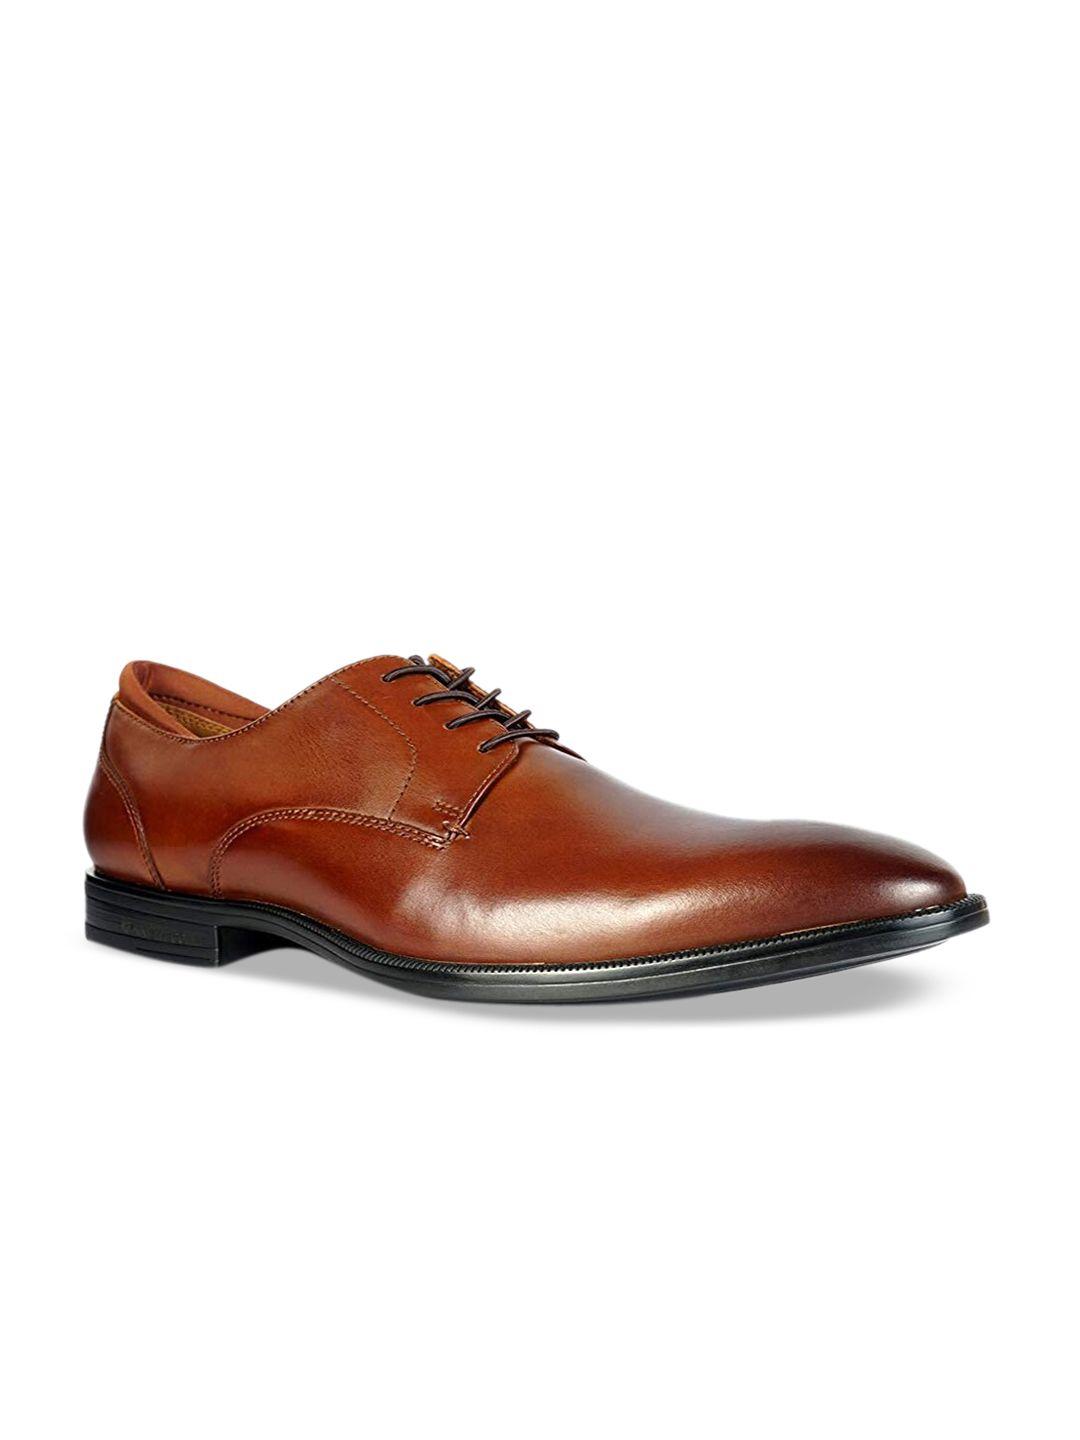 kenneth-cole-men-brown-solid-leather-formal-derbys-shoes